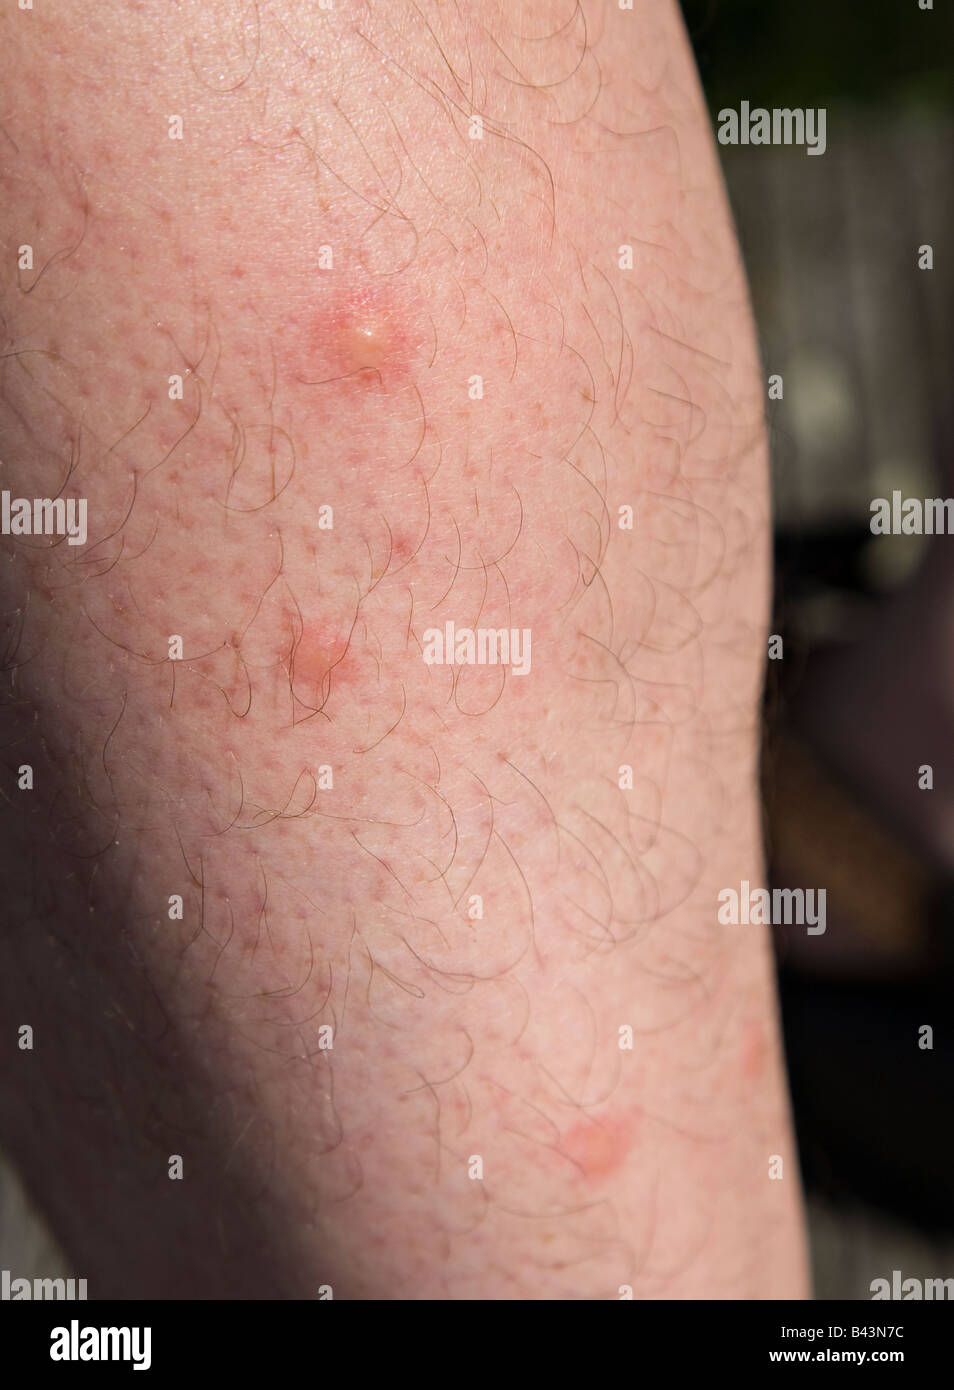 Mosquito bites on leg Stock Photo